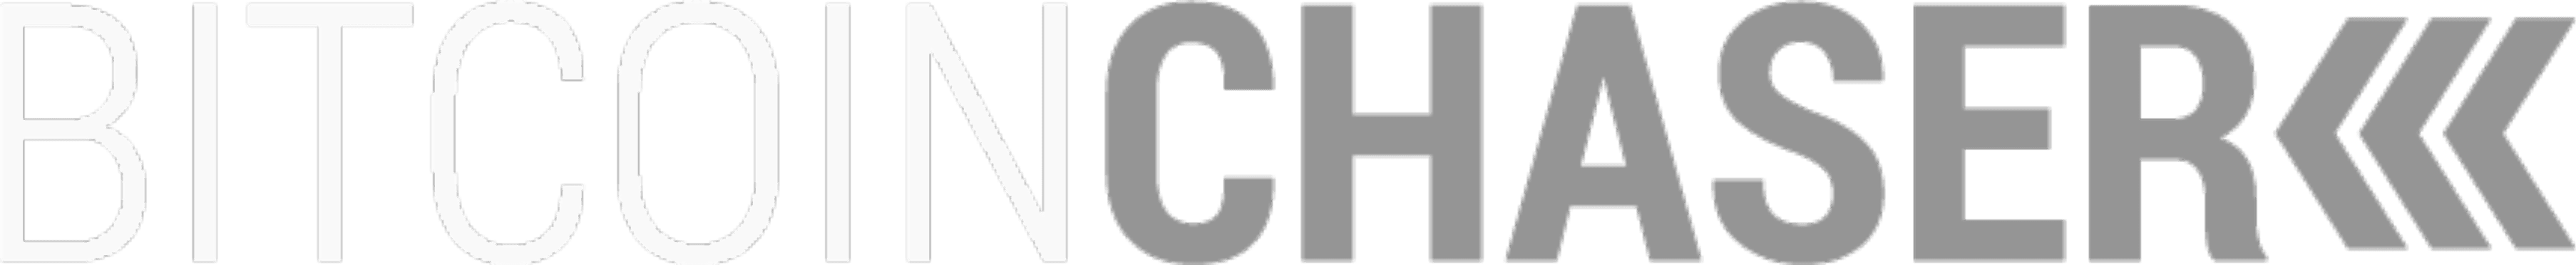 bitcoinchaser logo